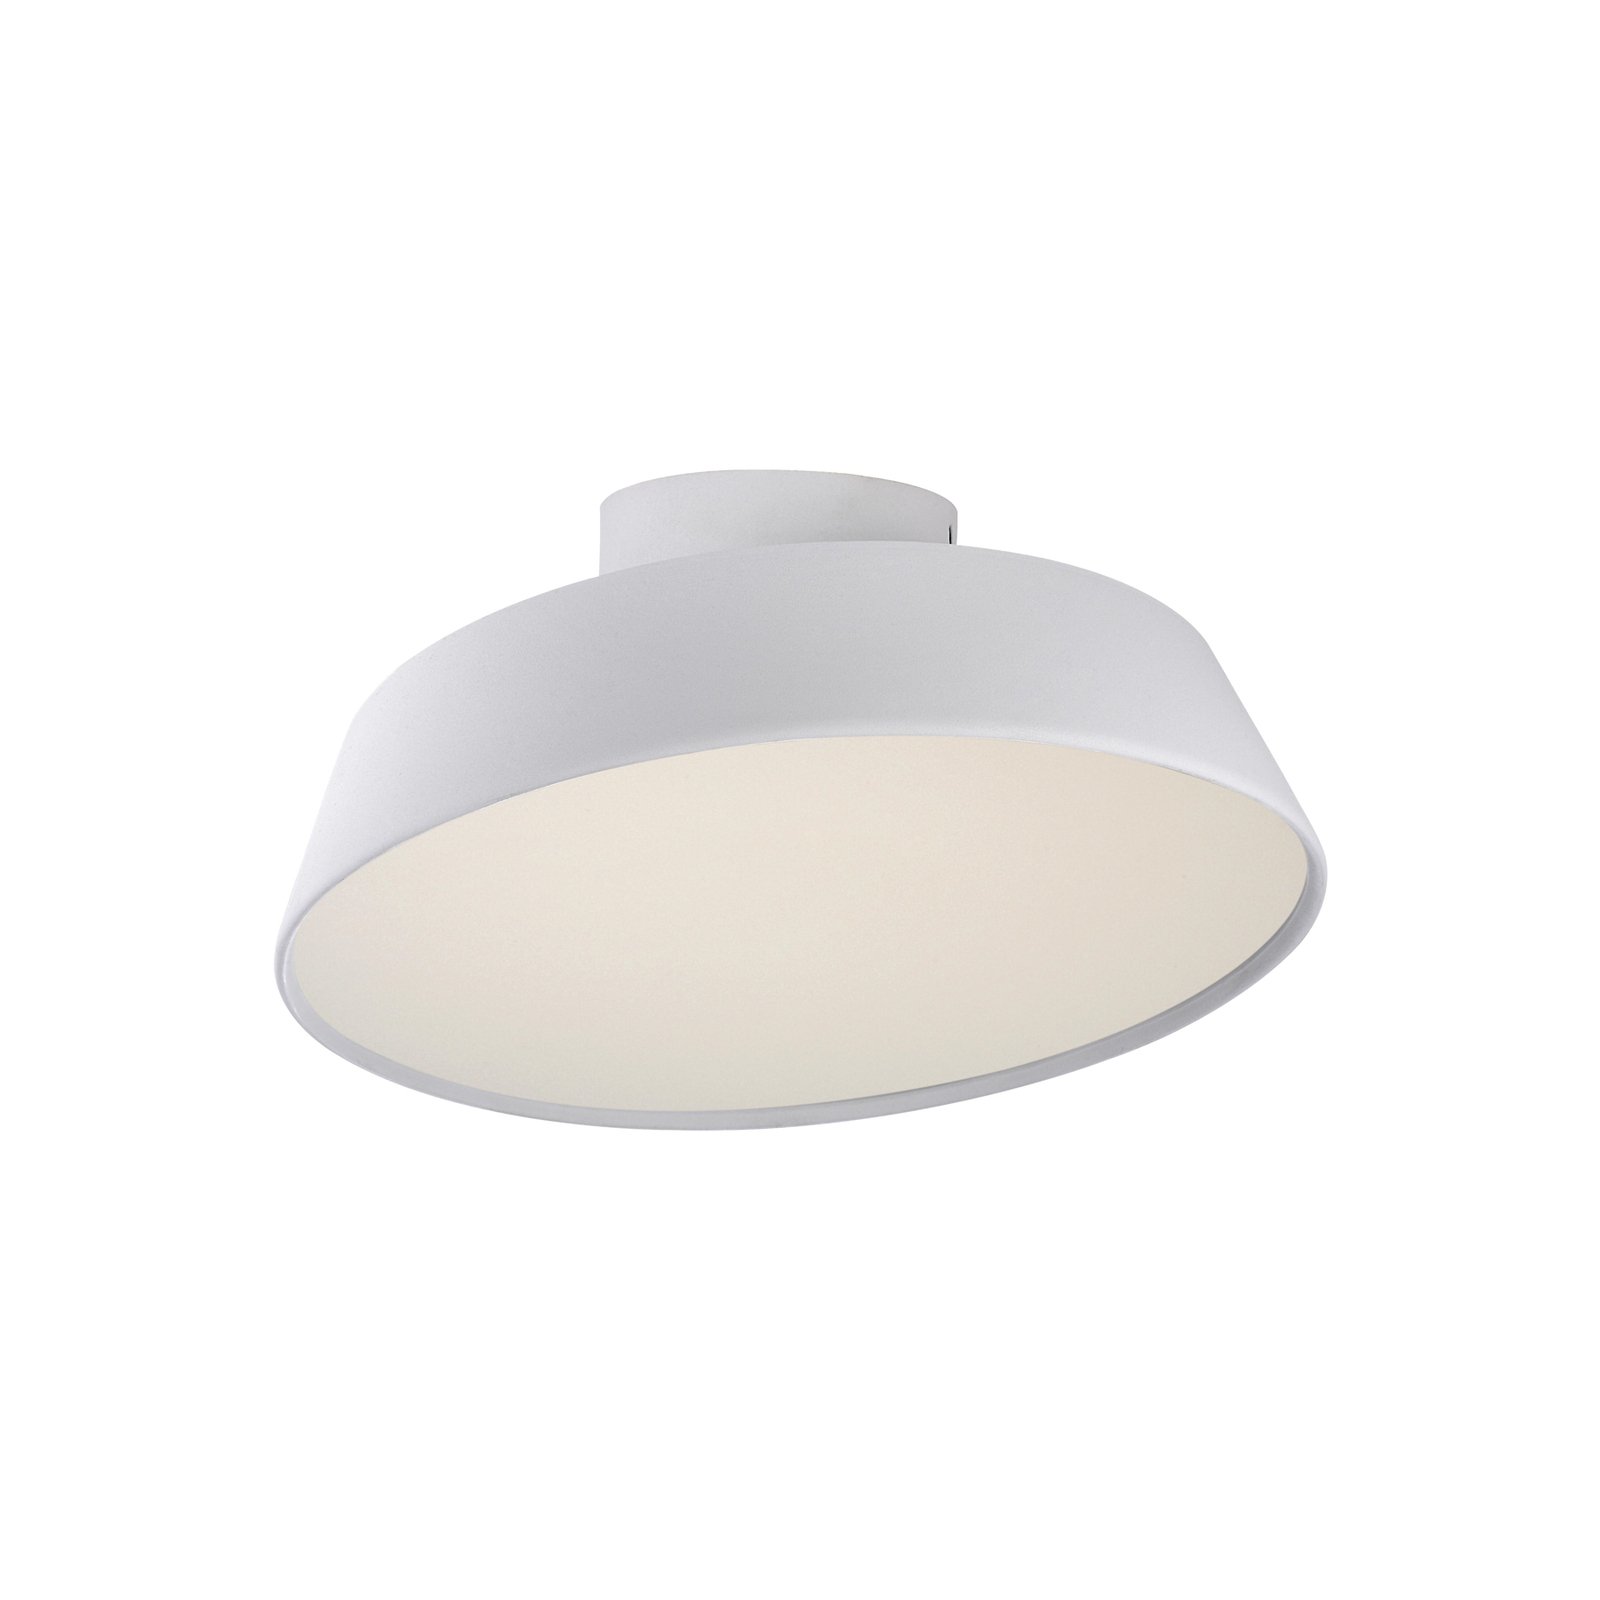 Plafonnier LED Kaito 2 Dim, blanc, Ø 30 cm, intensité variable